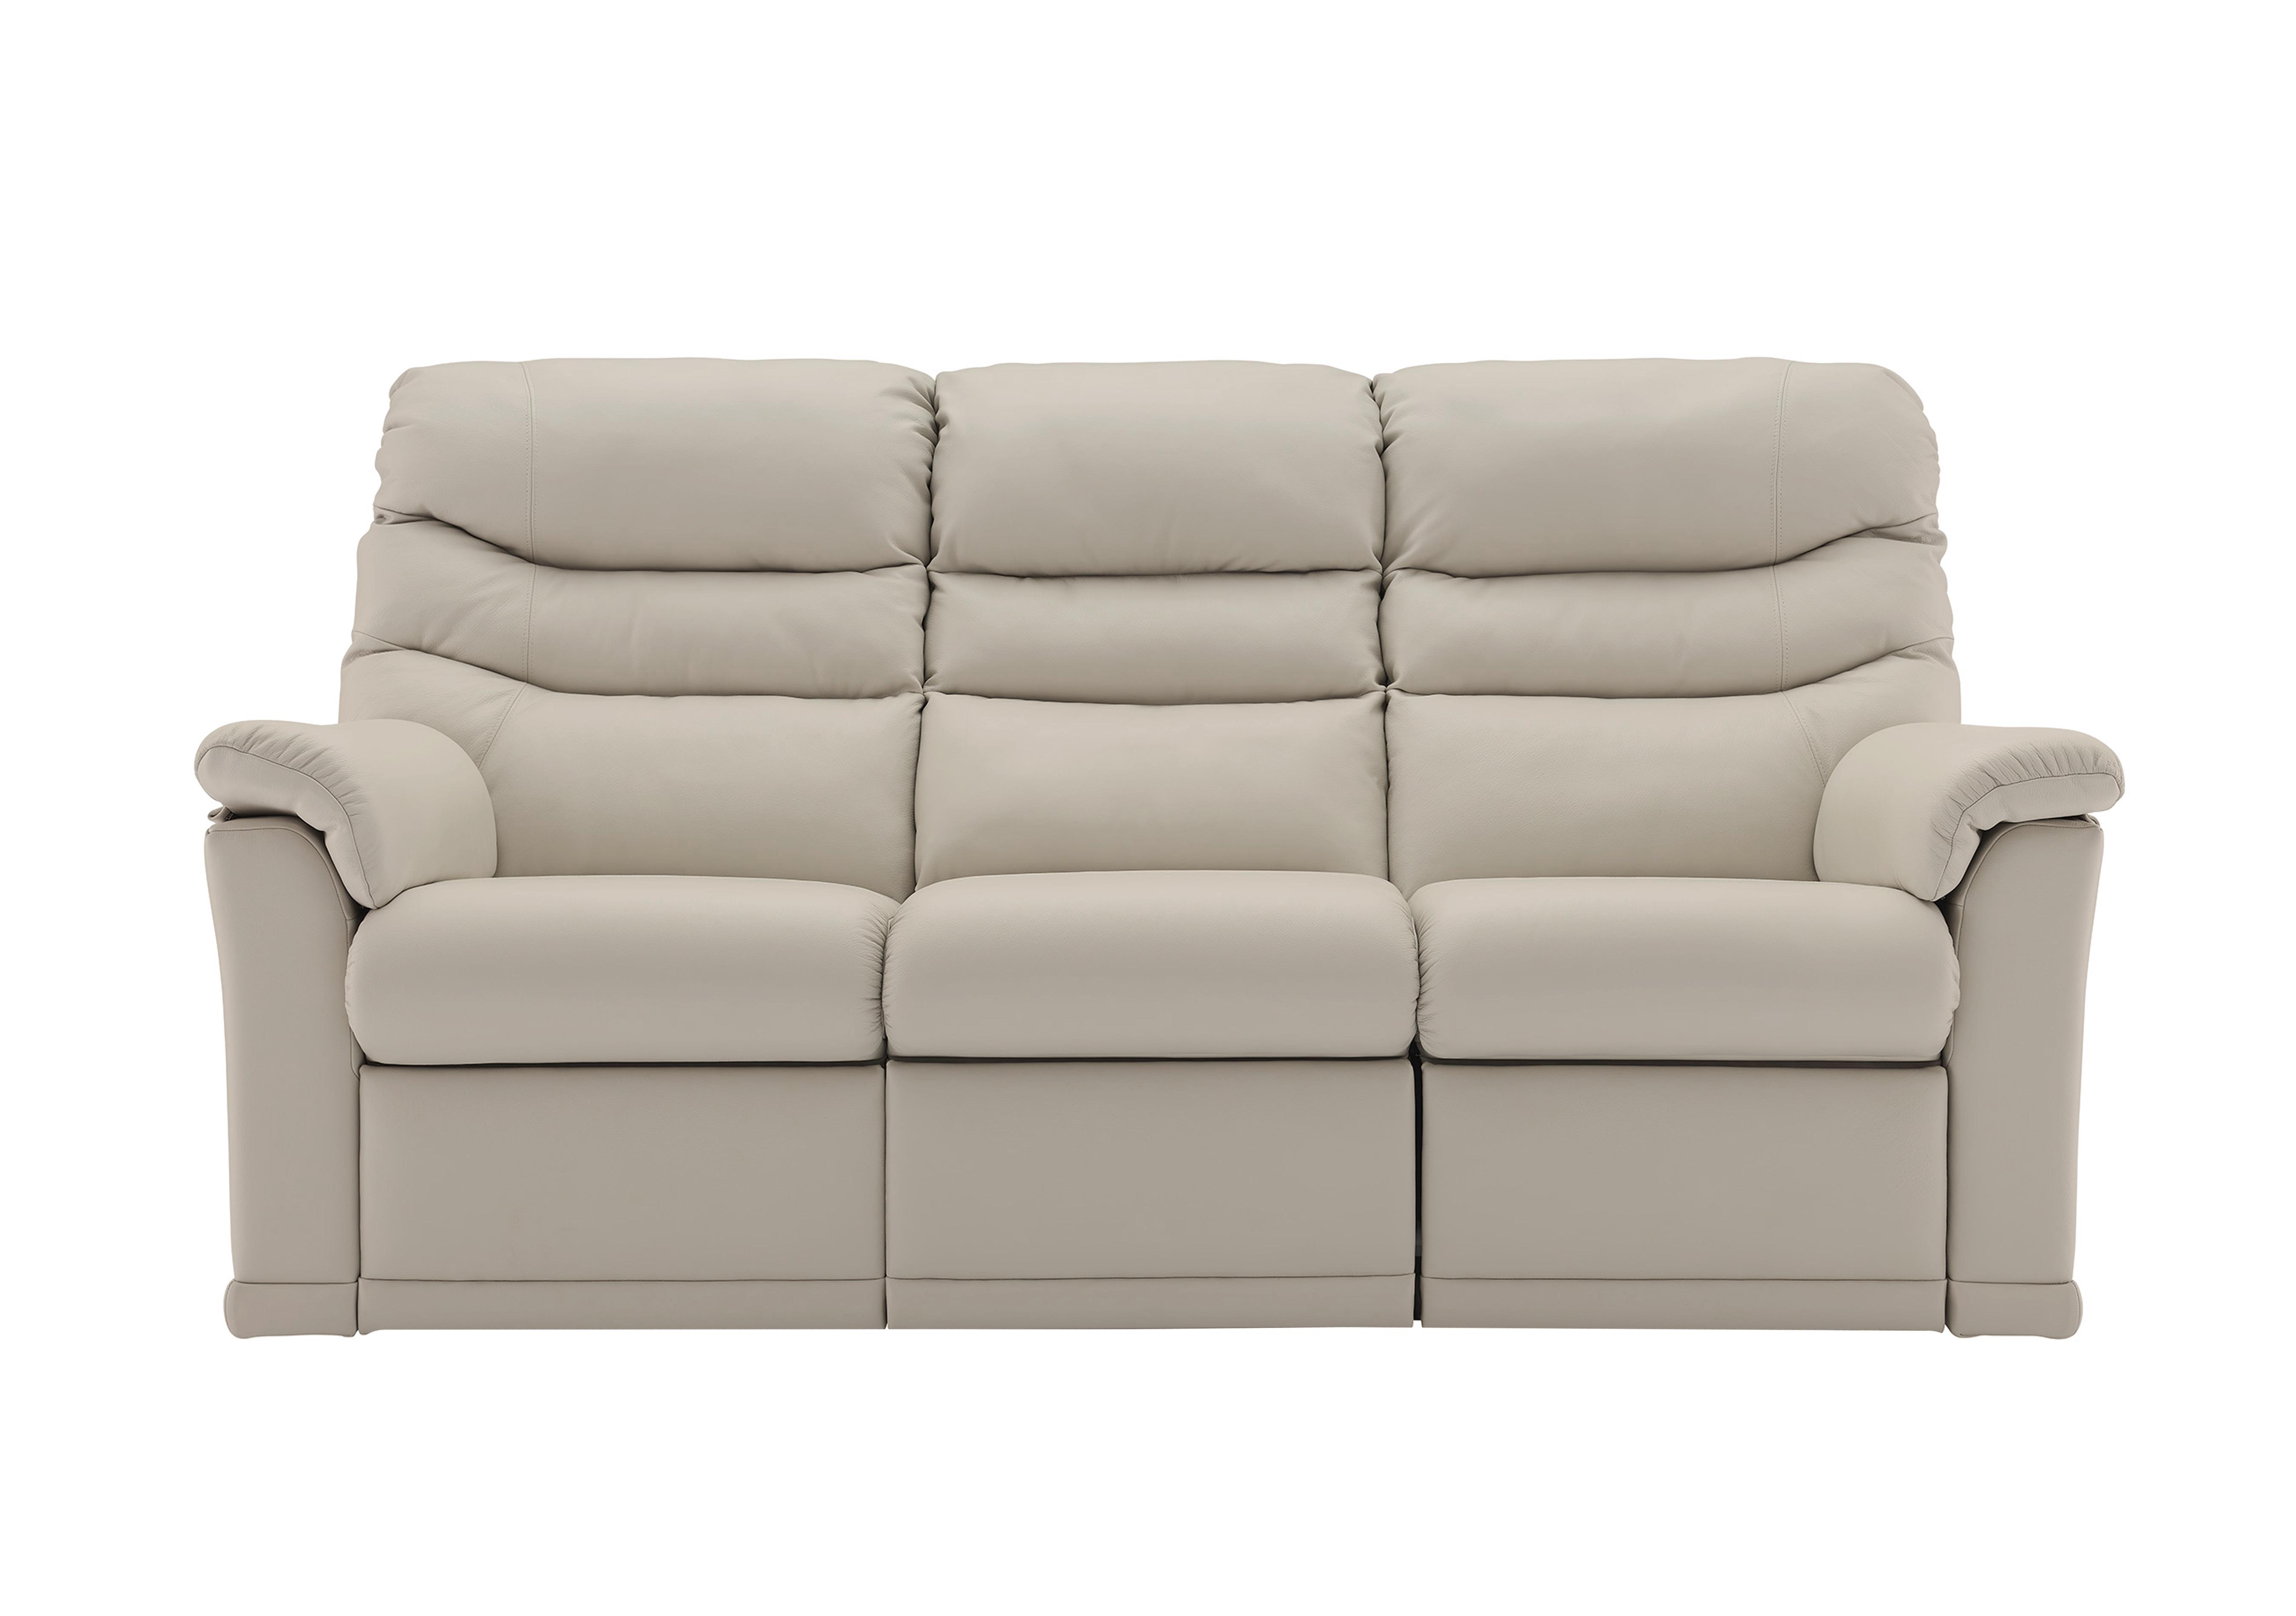 Malvern 3 Seater Leather Sofa in P219 Capri Putty on Furniture Village